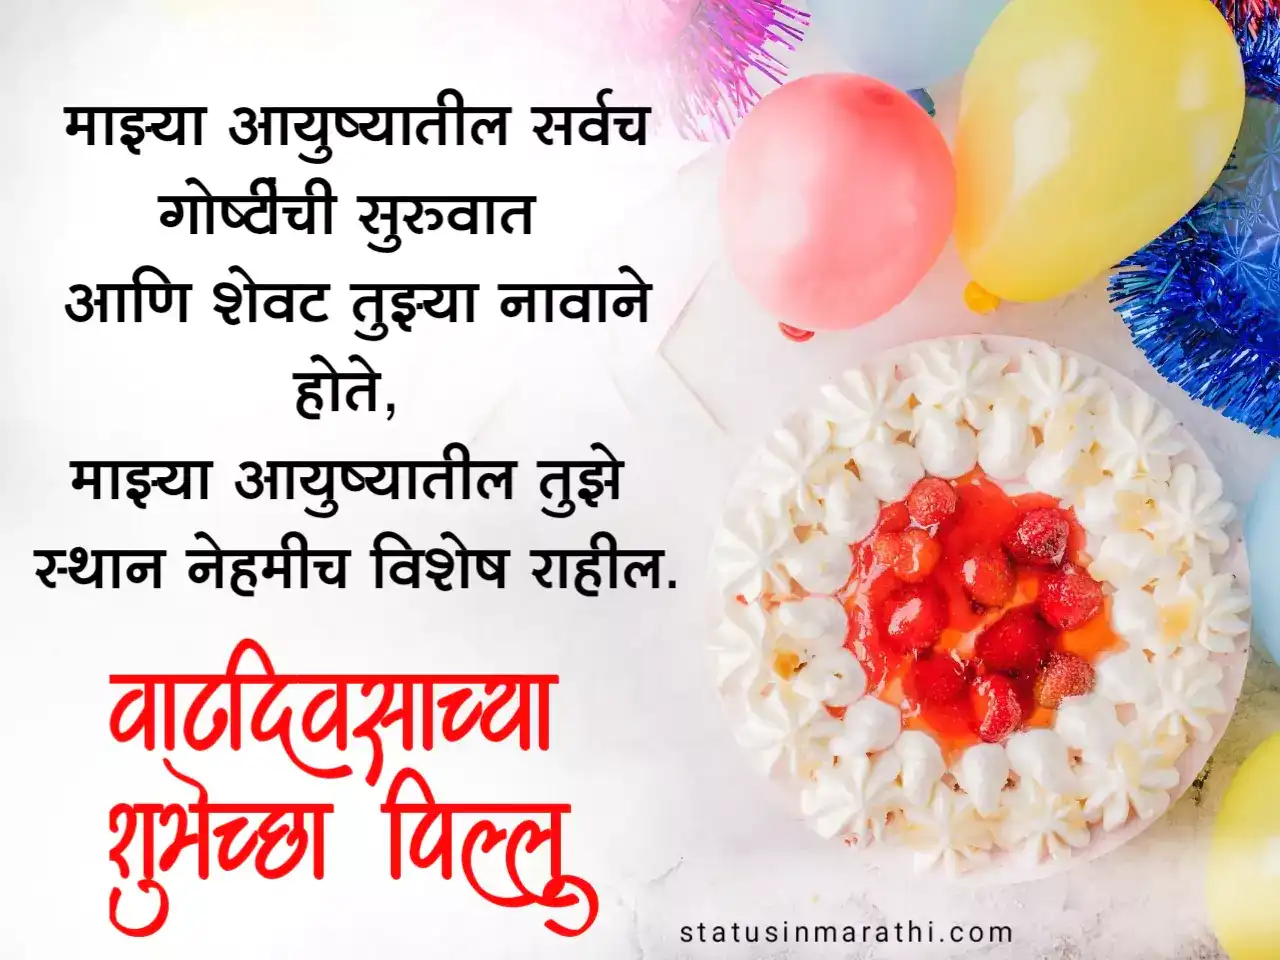 Happy Birthday wishes for girlfriend in marathi